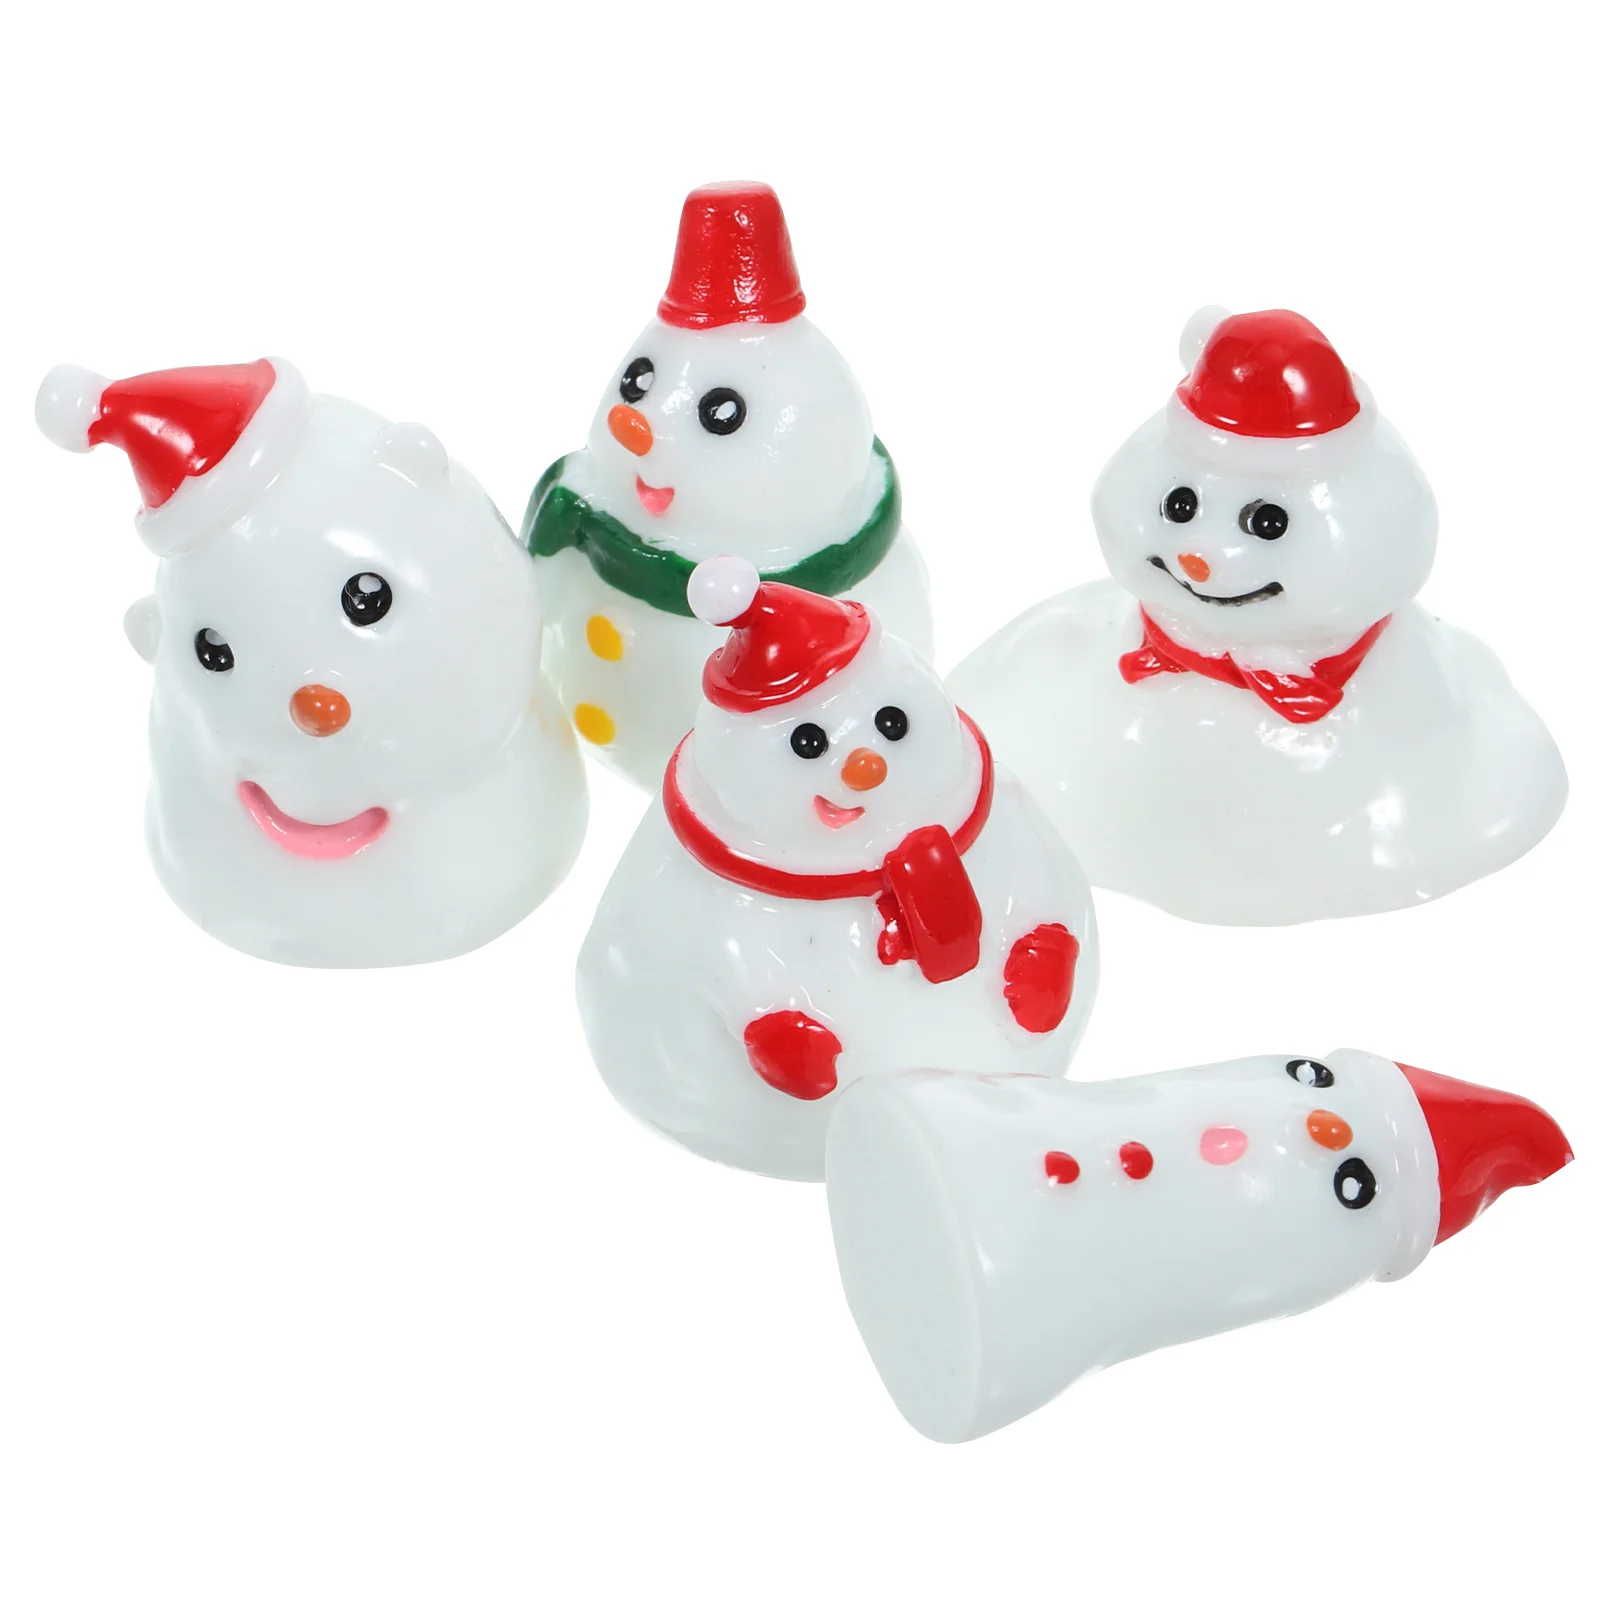 

5 Pcs Ornaments Christmas Party Favors Mini Snowman Figurine Table Top Decor Miniature Xmas Resin Tabletop Figure Supplies